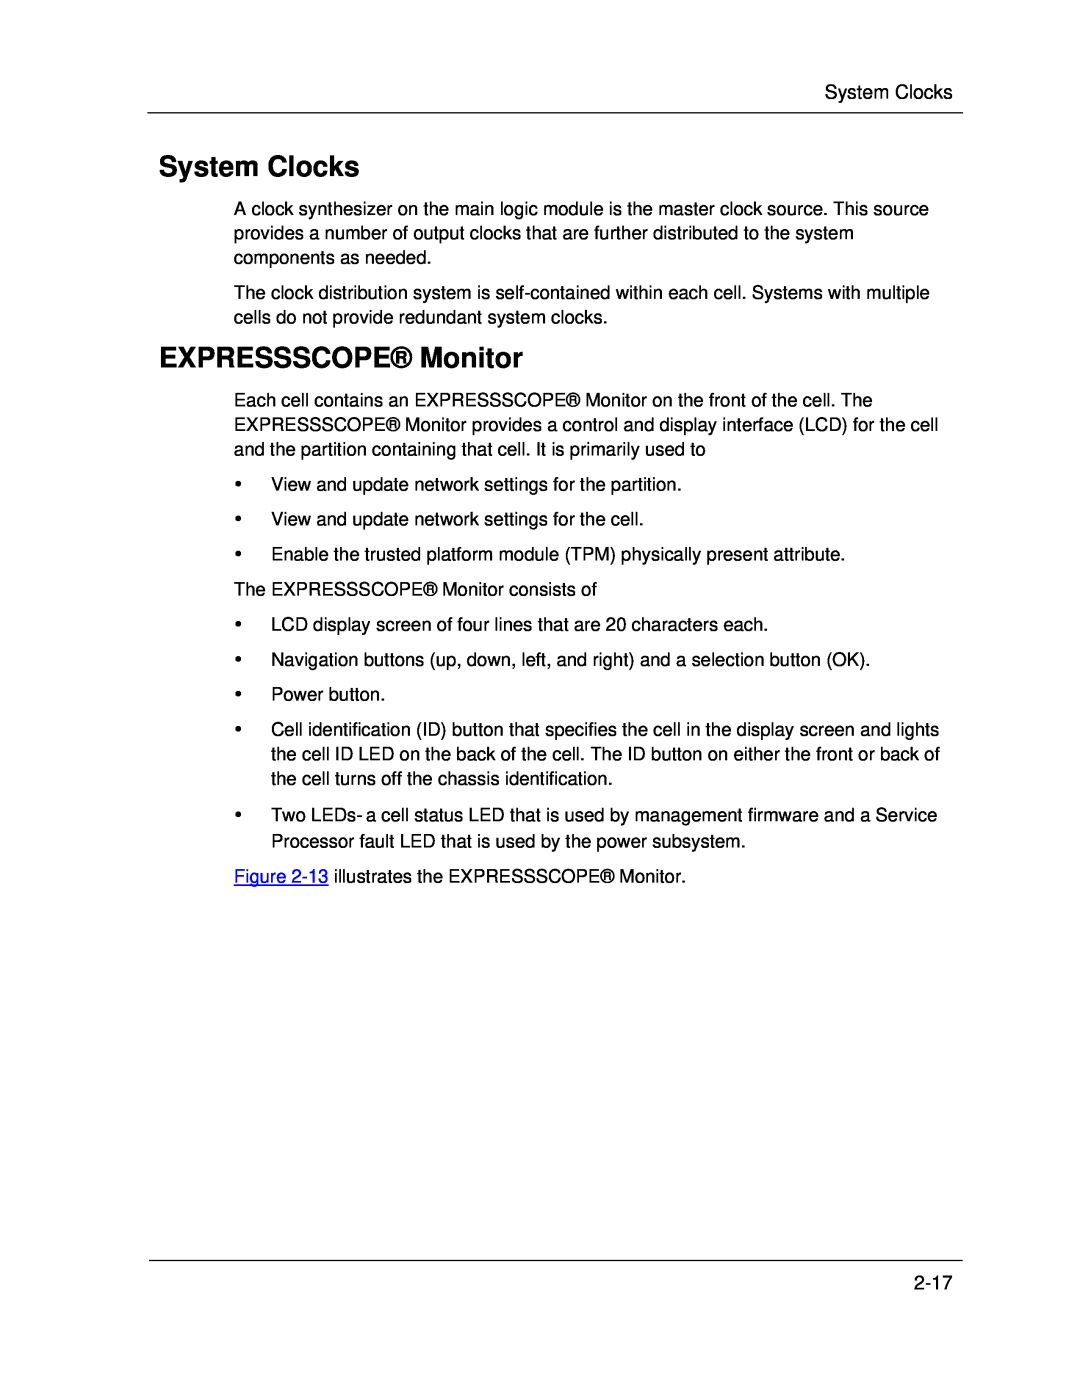 NEC A1160 manual System Clocks, EXPRESSSCOPE Monitor, 2-17 